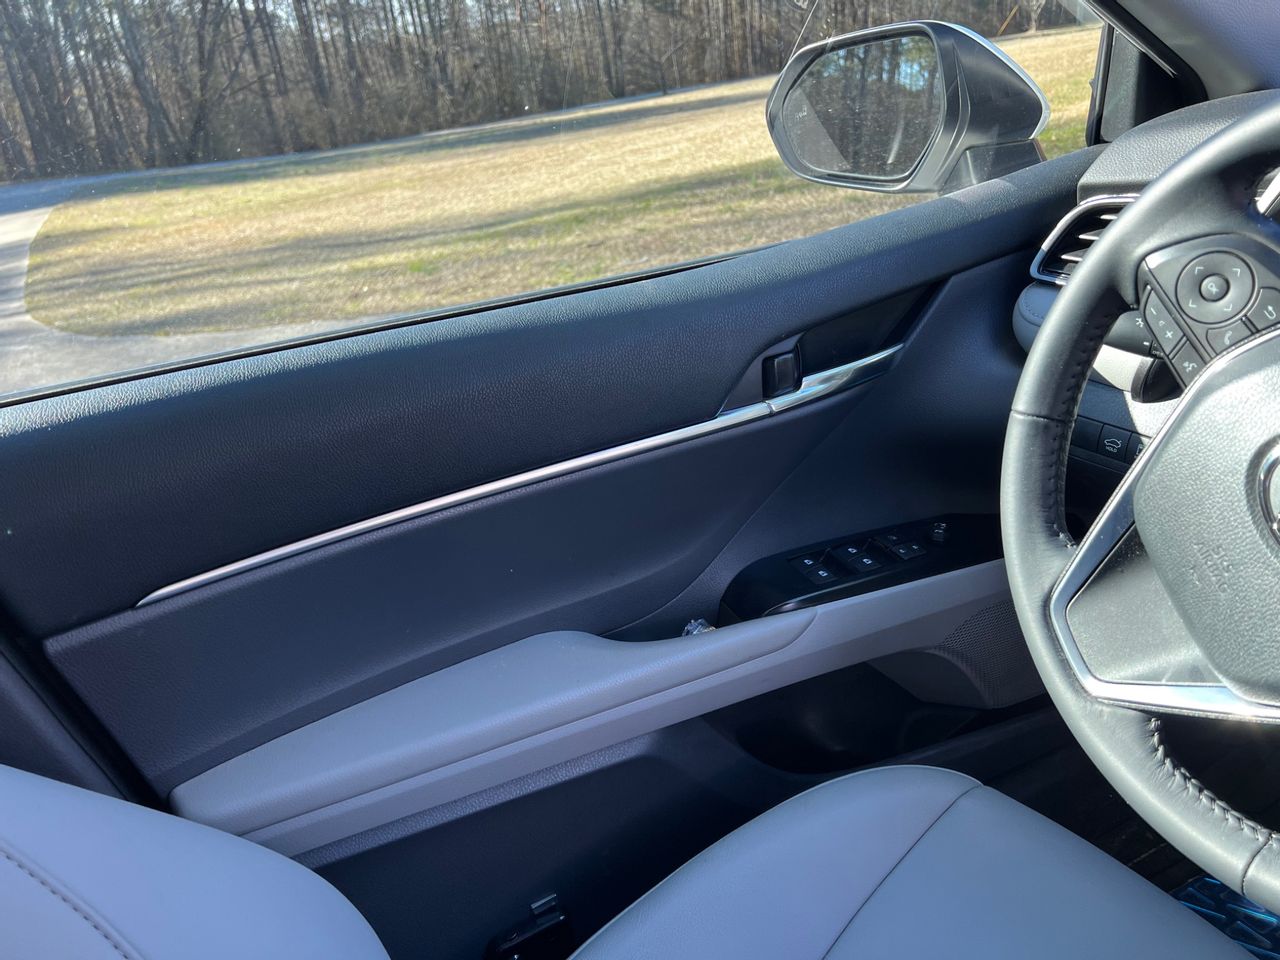 2020 Toyota Camry SE | Buchanan, GA, Super White (White), Front Wheel